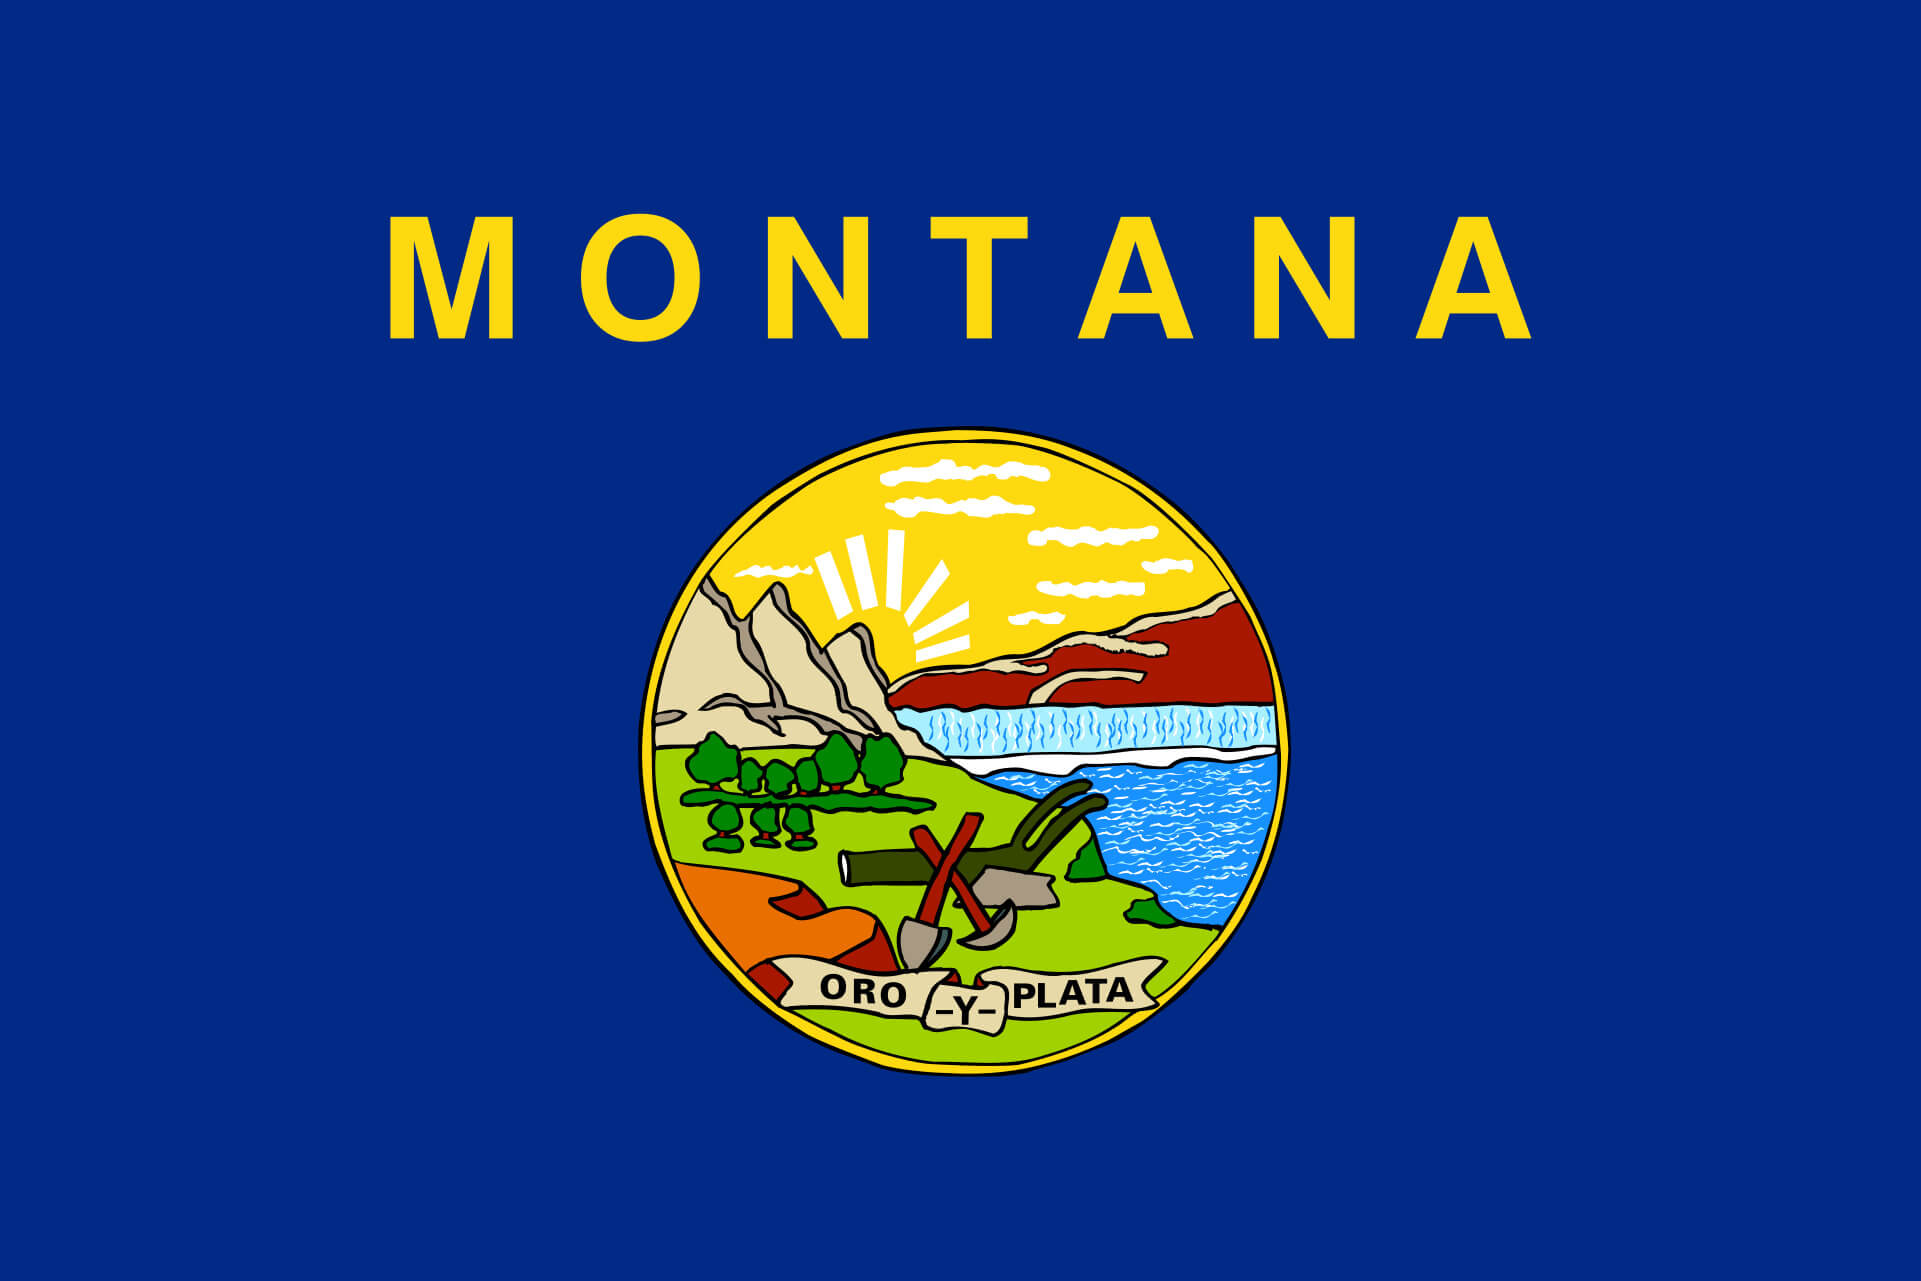 Montana Tax Relief